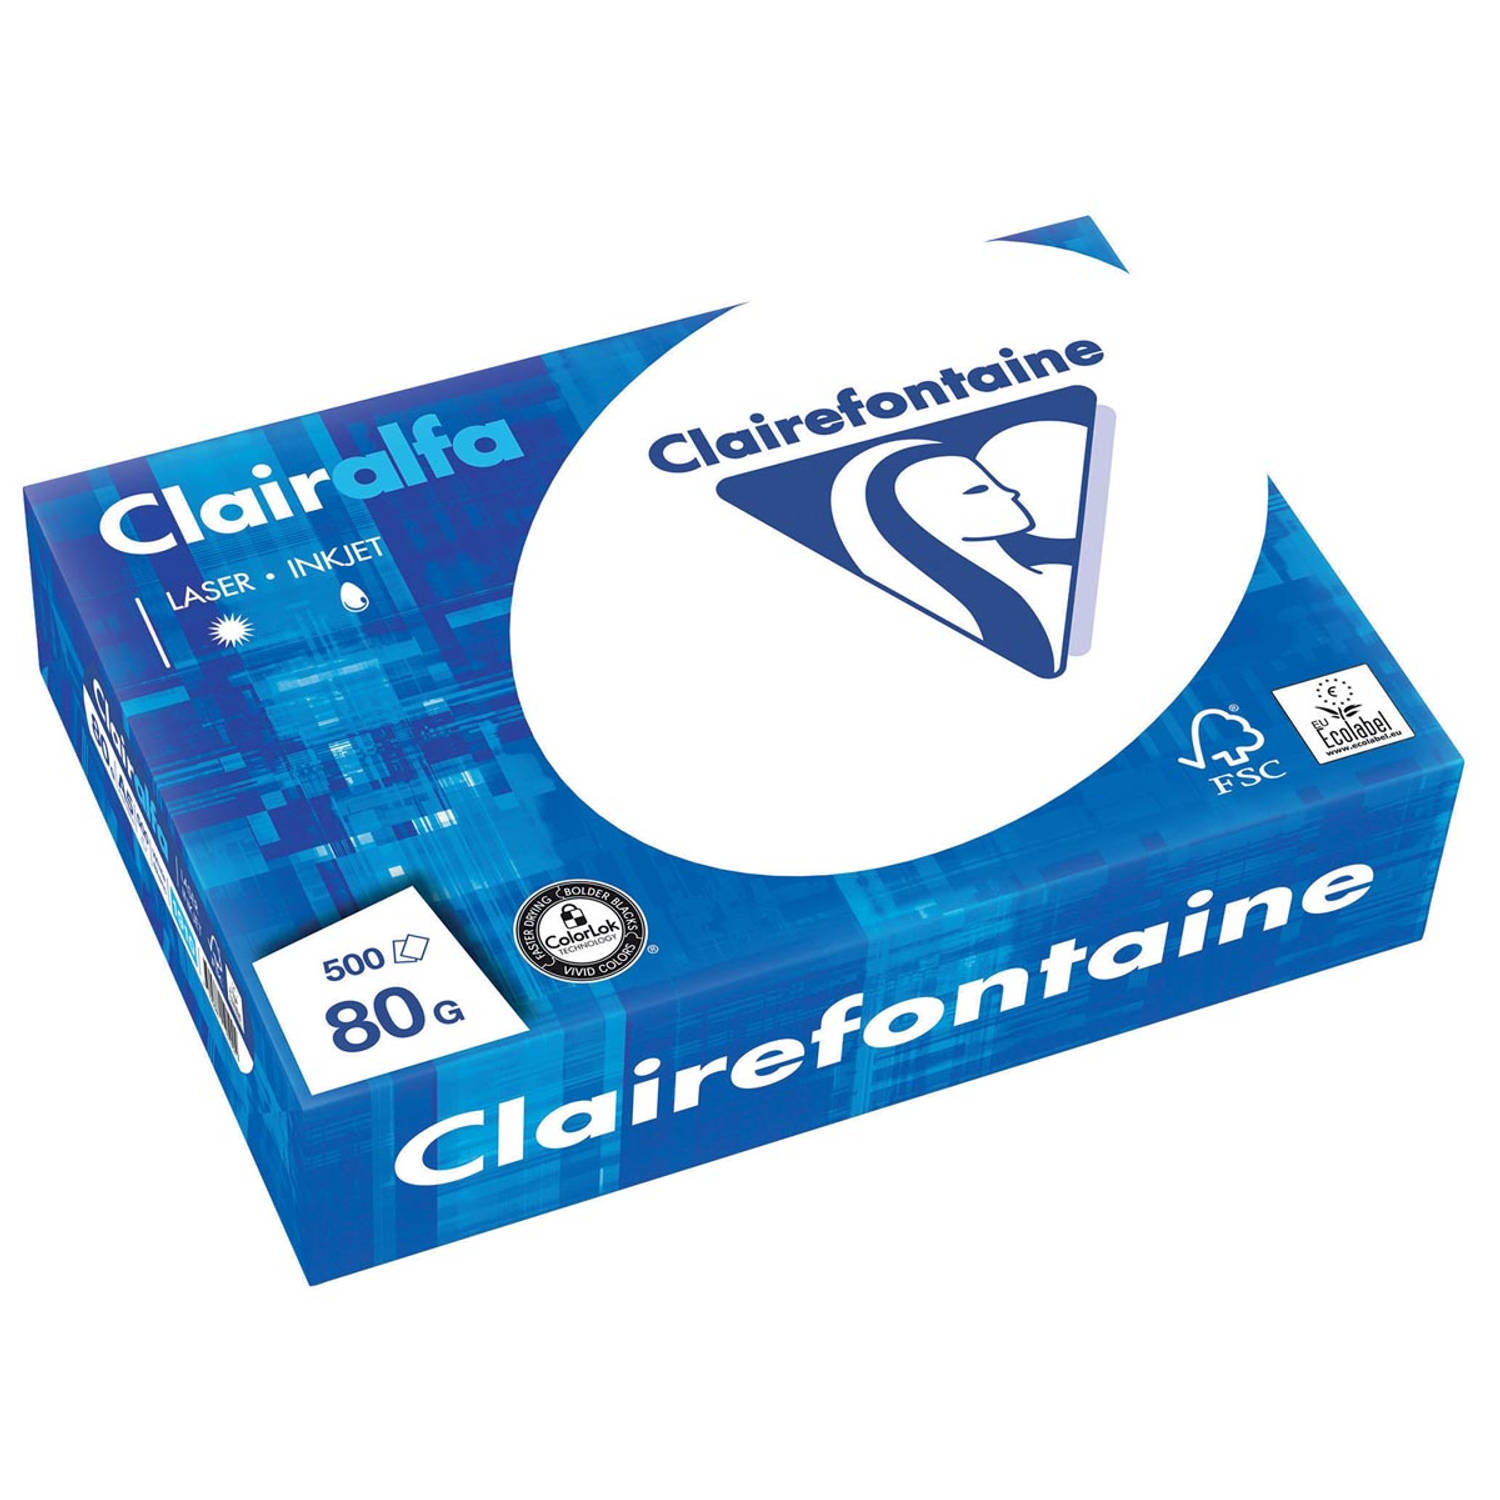 Clairefontaine Clairalfa printpapier ft A5, 80 g, pak van 500 vel 10 stuks